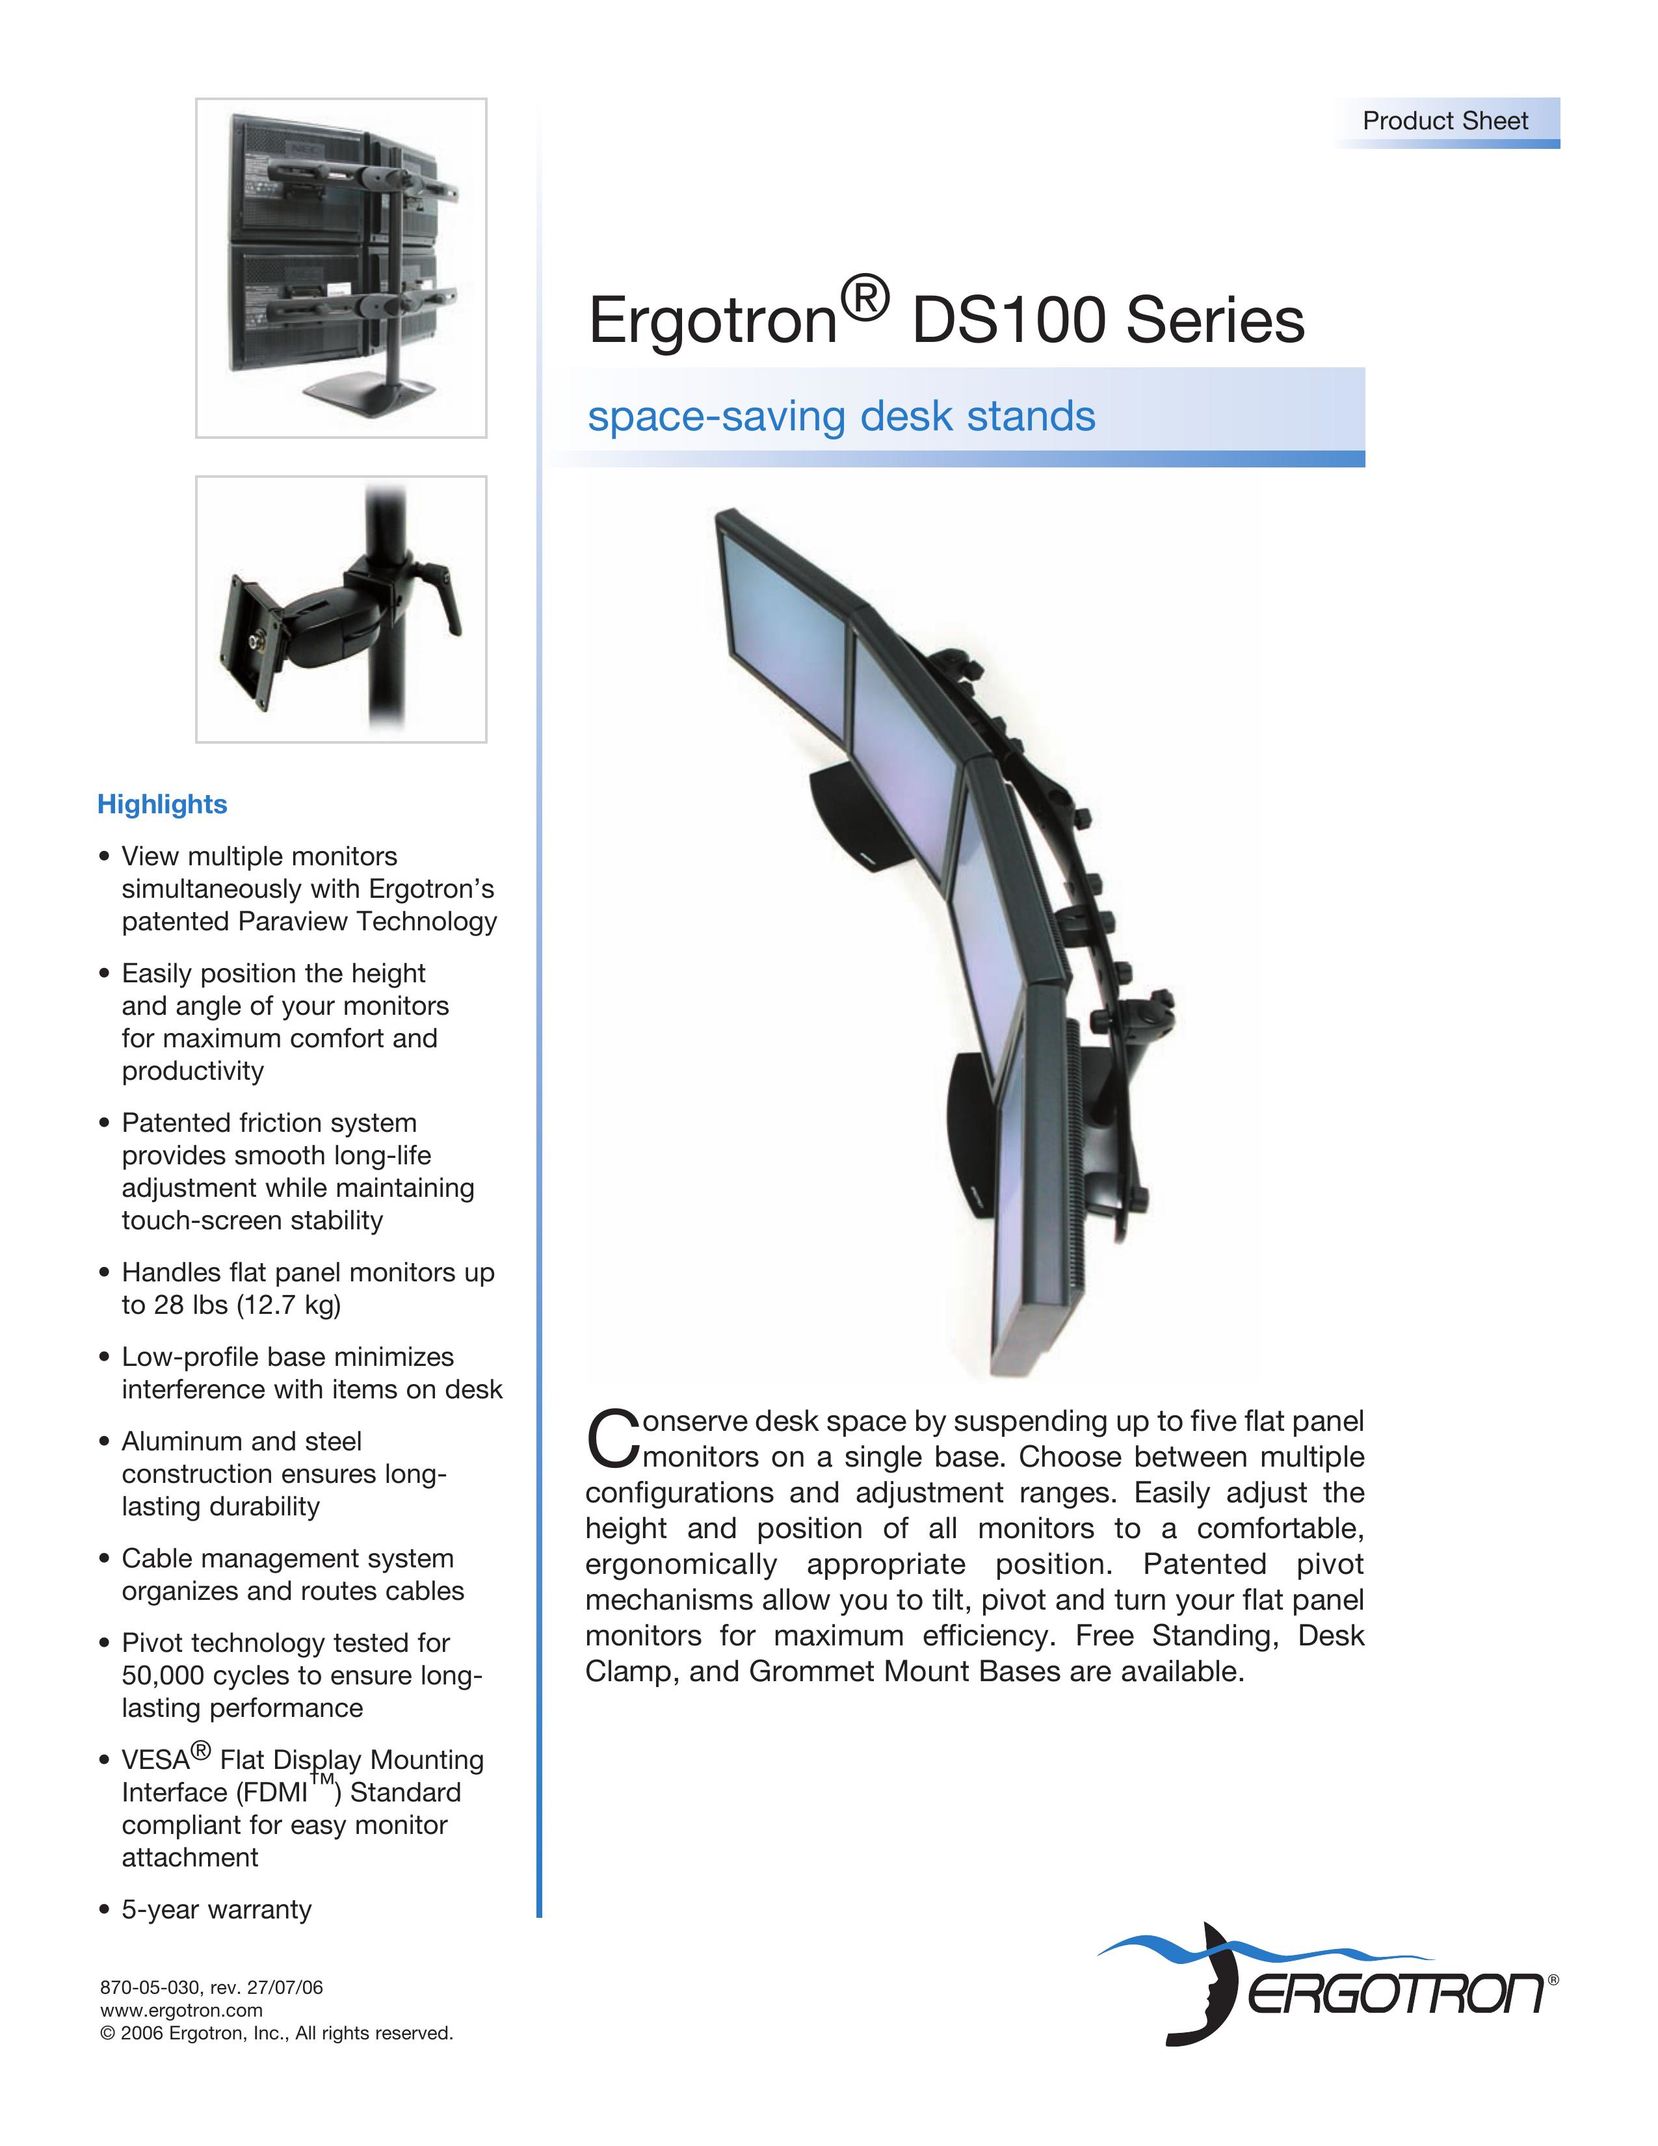 Ergotron DS100 Series Indoor Furnishings User Manual